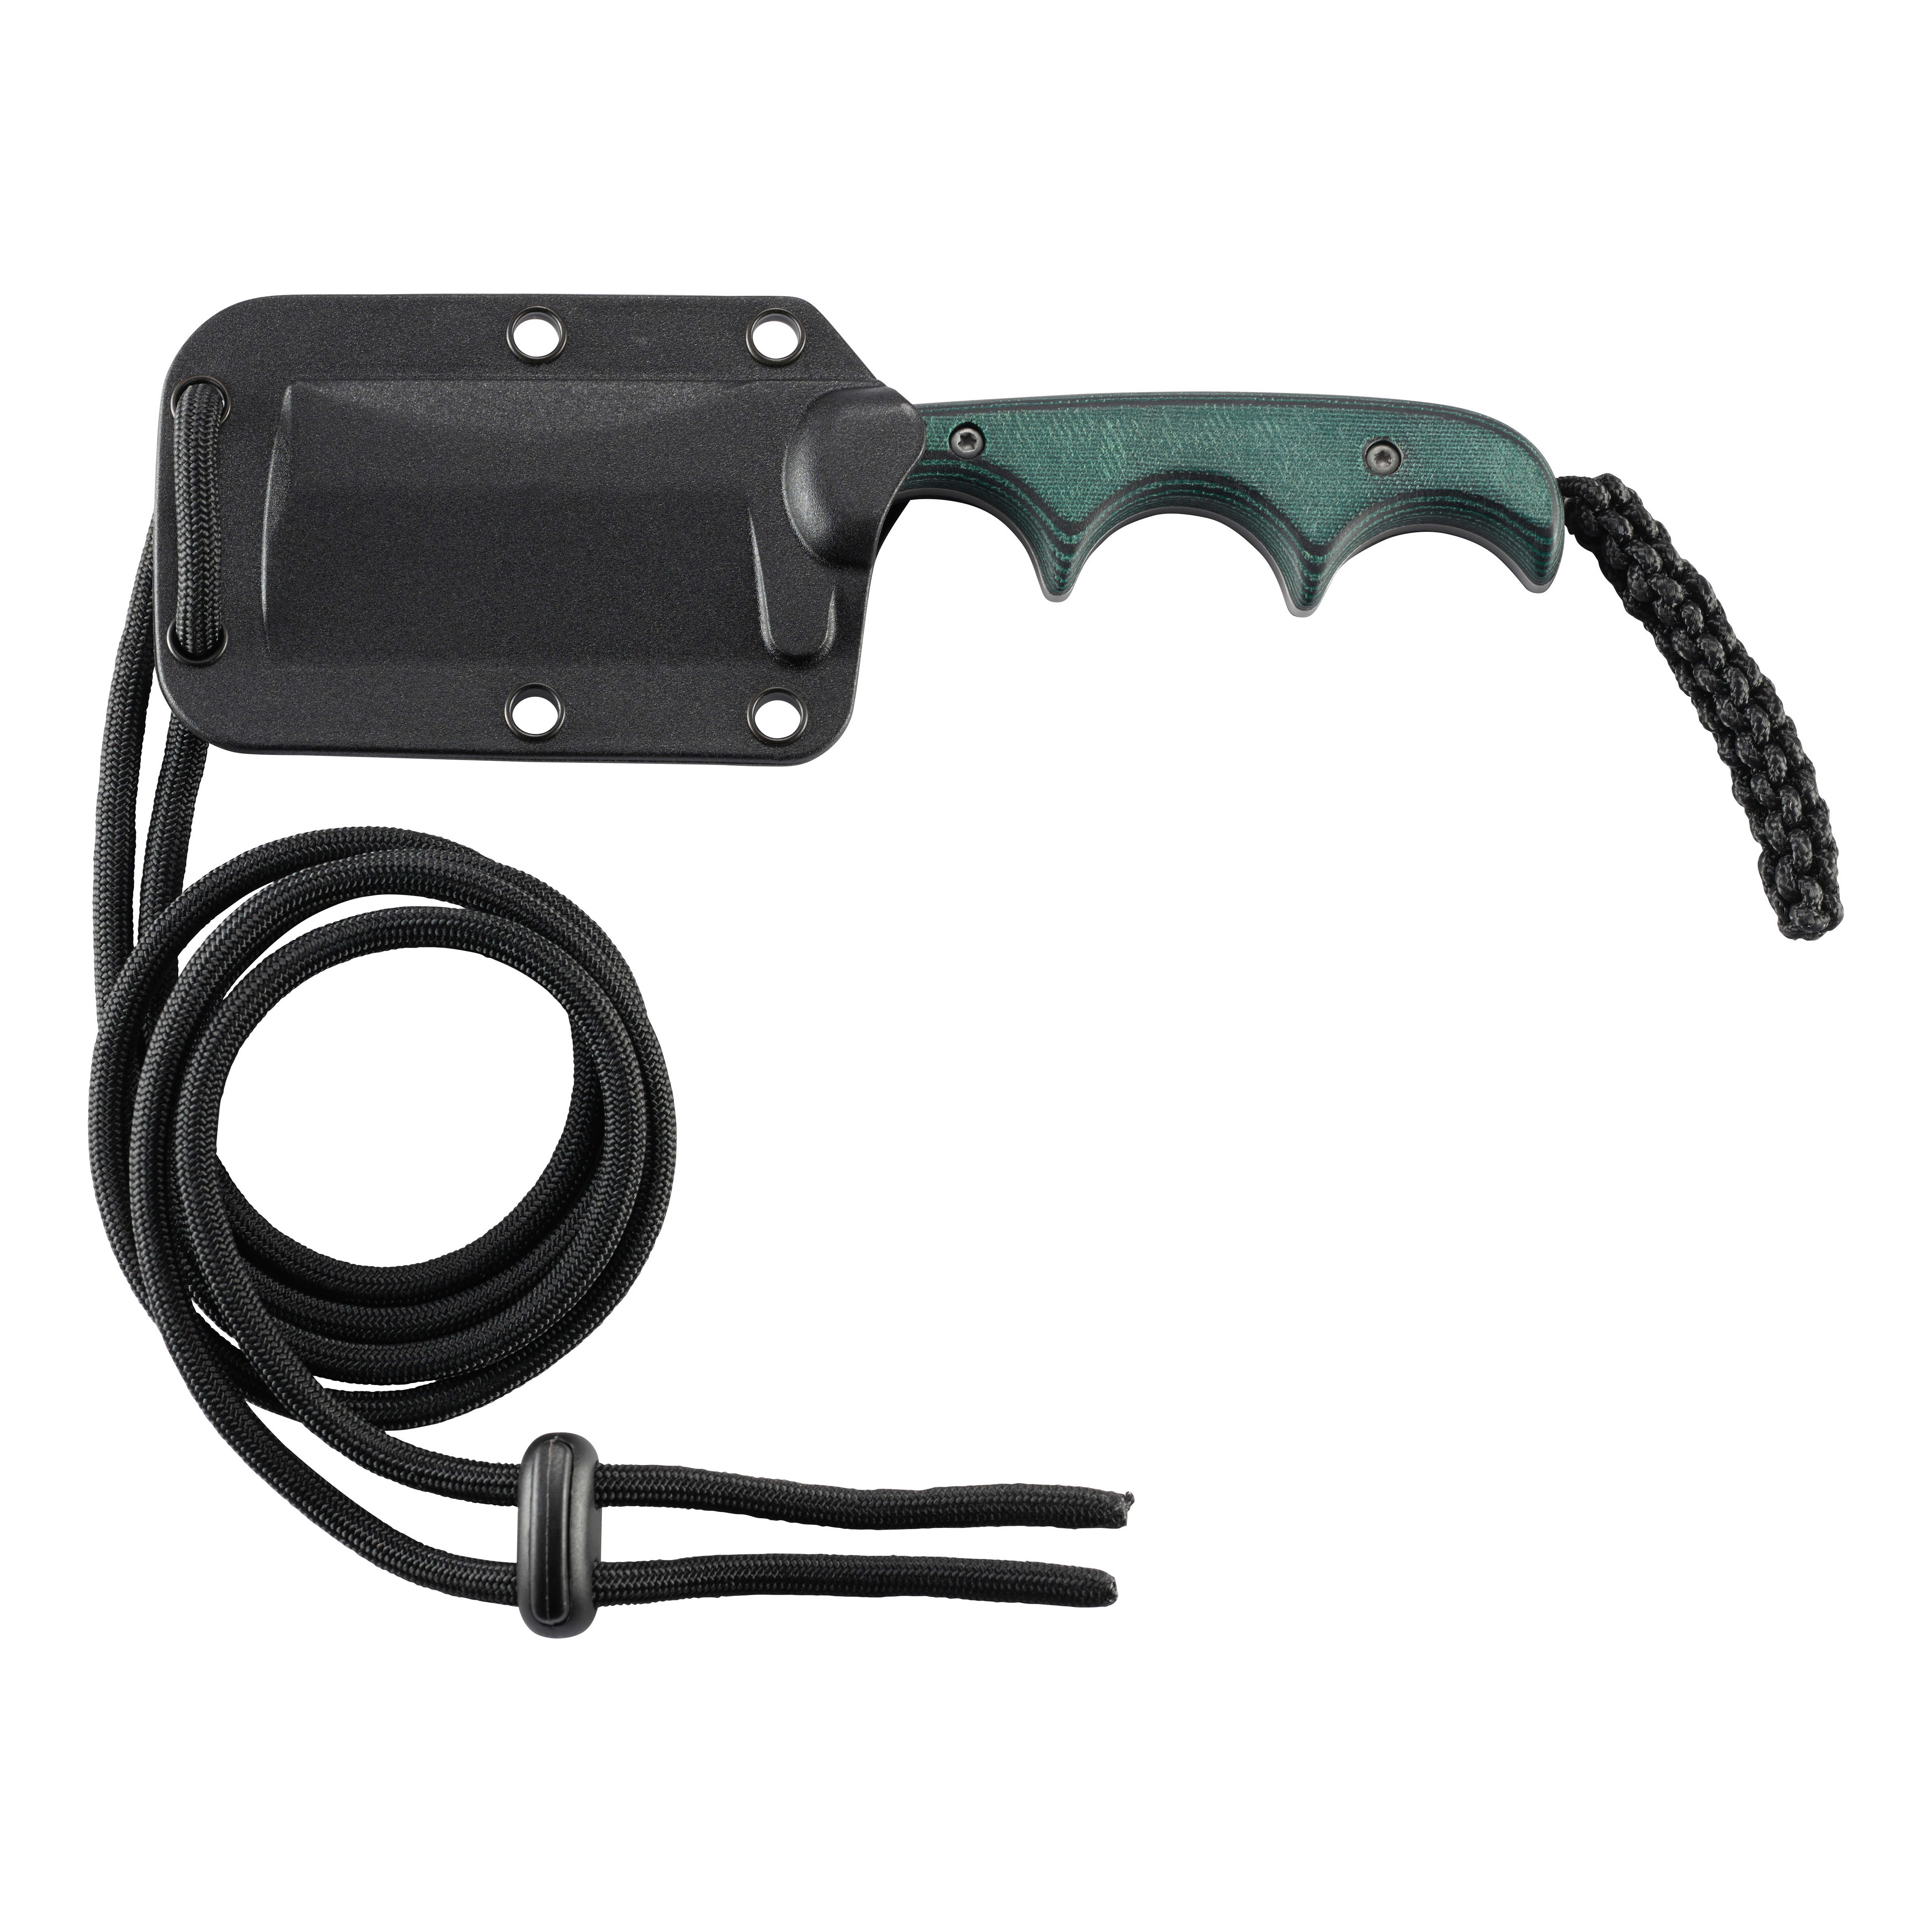 CRKT® Minimalist® Cleaver Fixed Blade Knife - In Sheath View